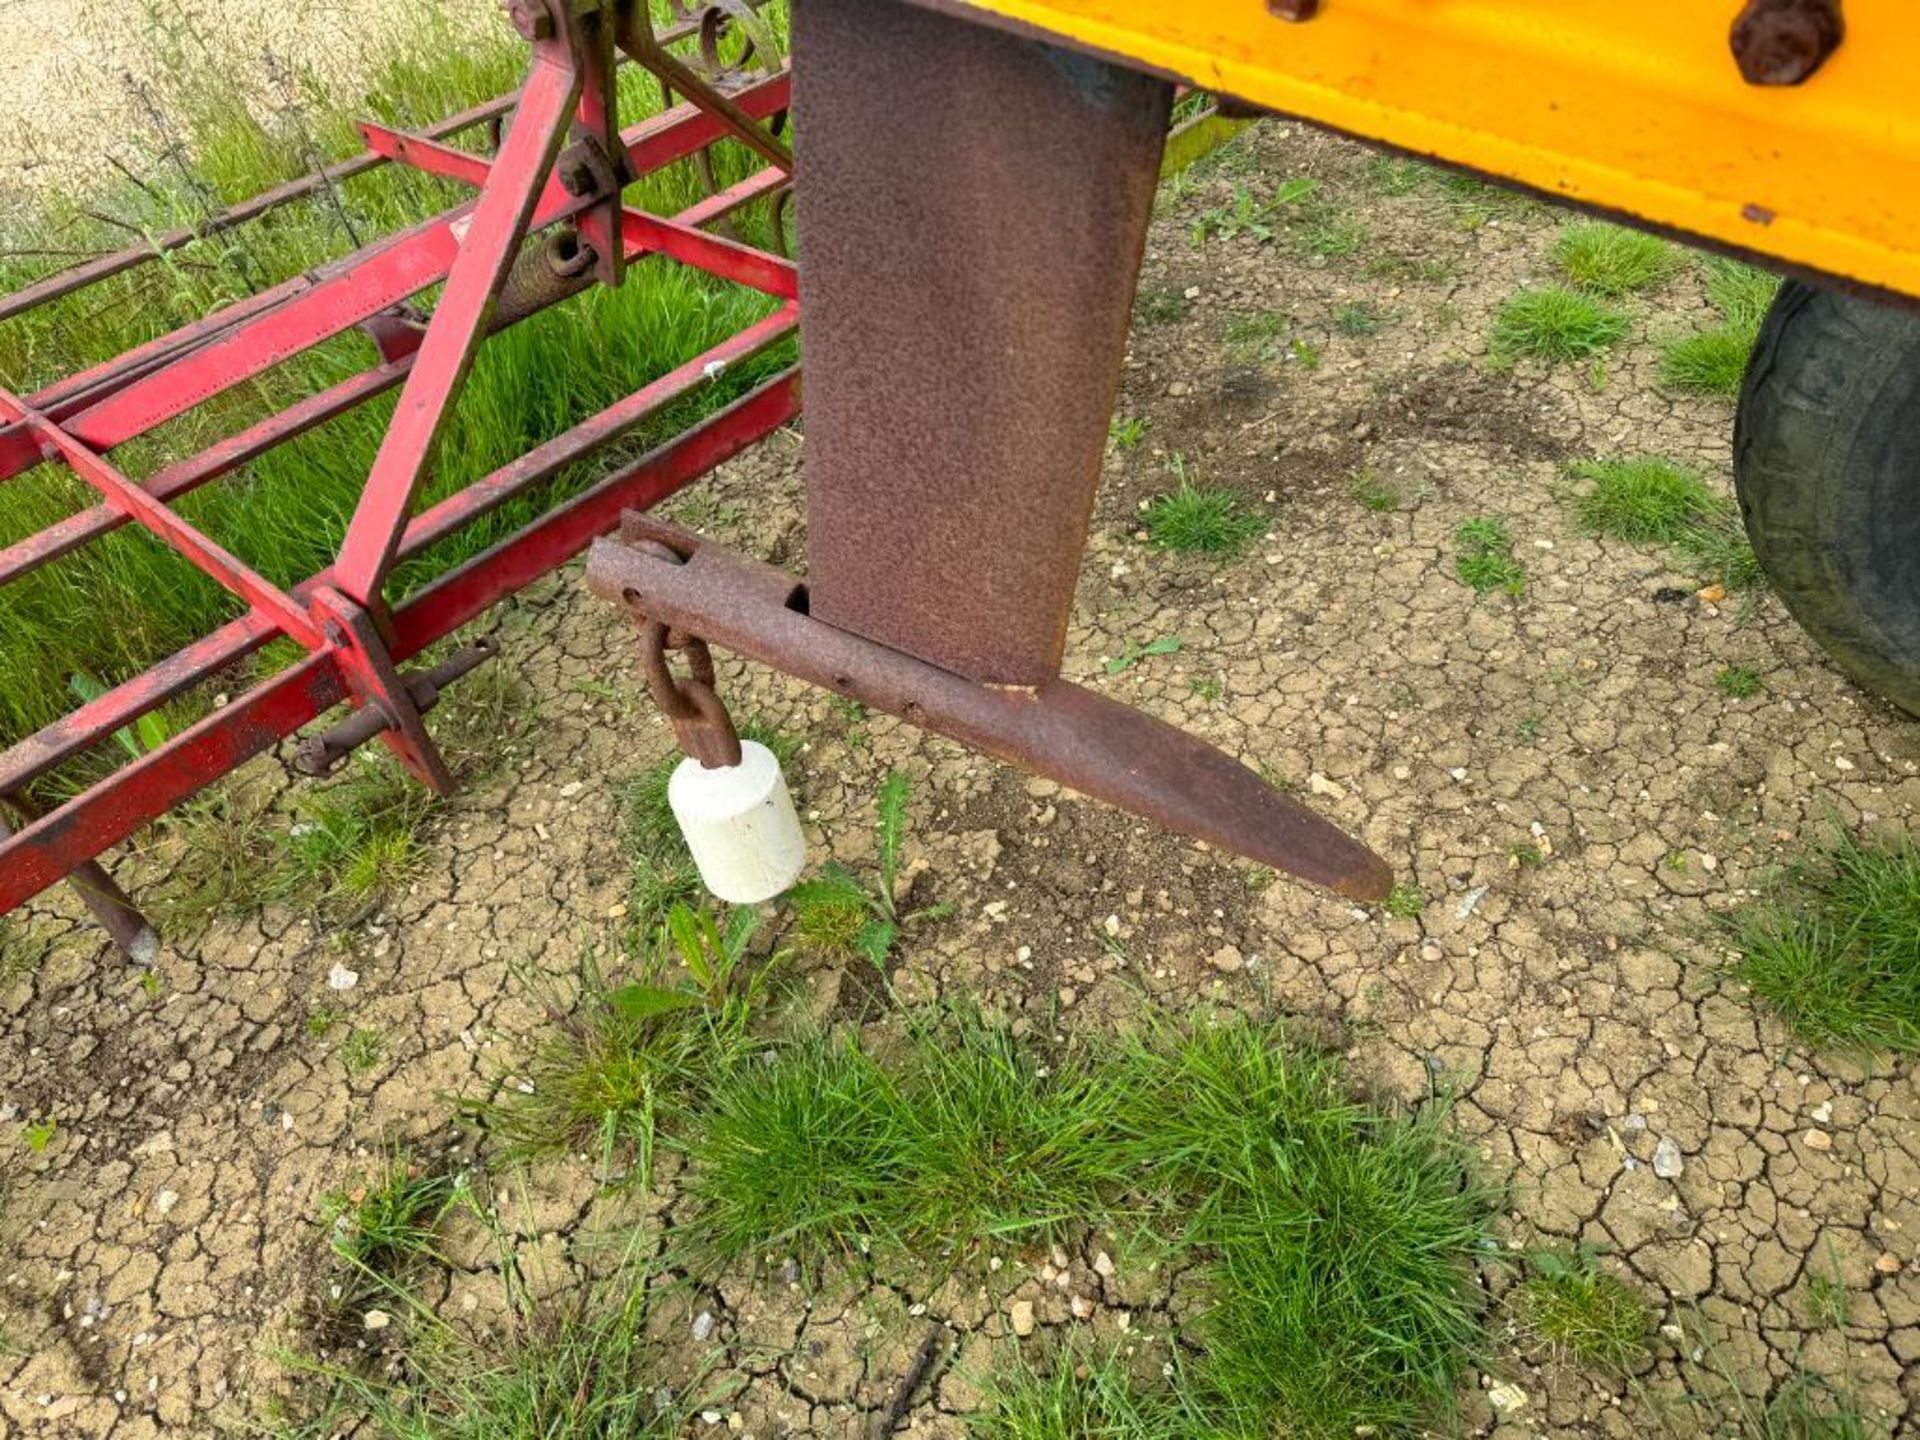 Miles single leg mole plough, trailed. Serial No: 3326 - Bild 2 aus 3